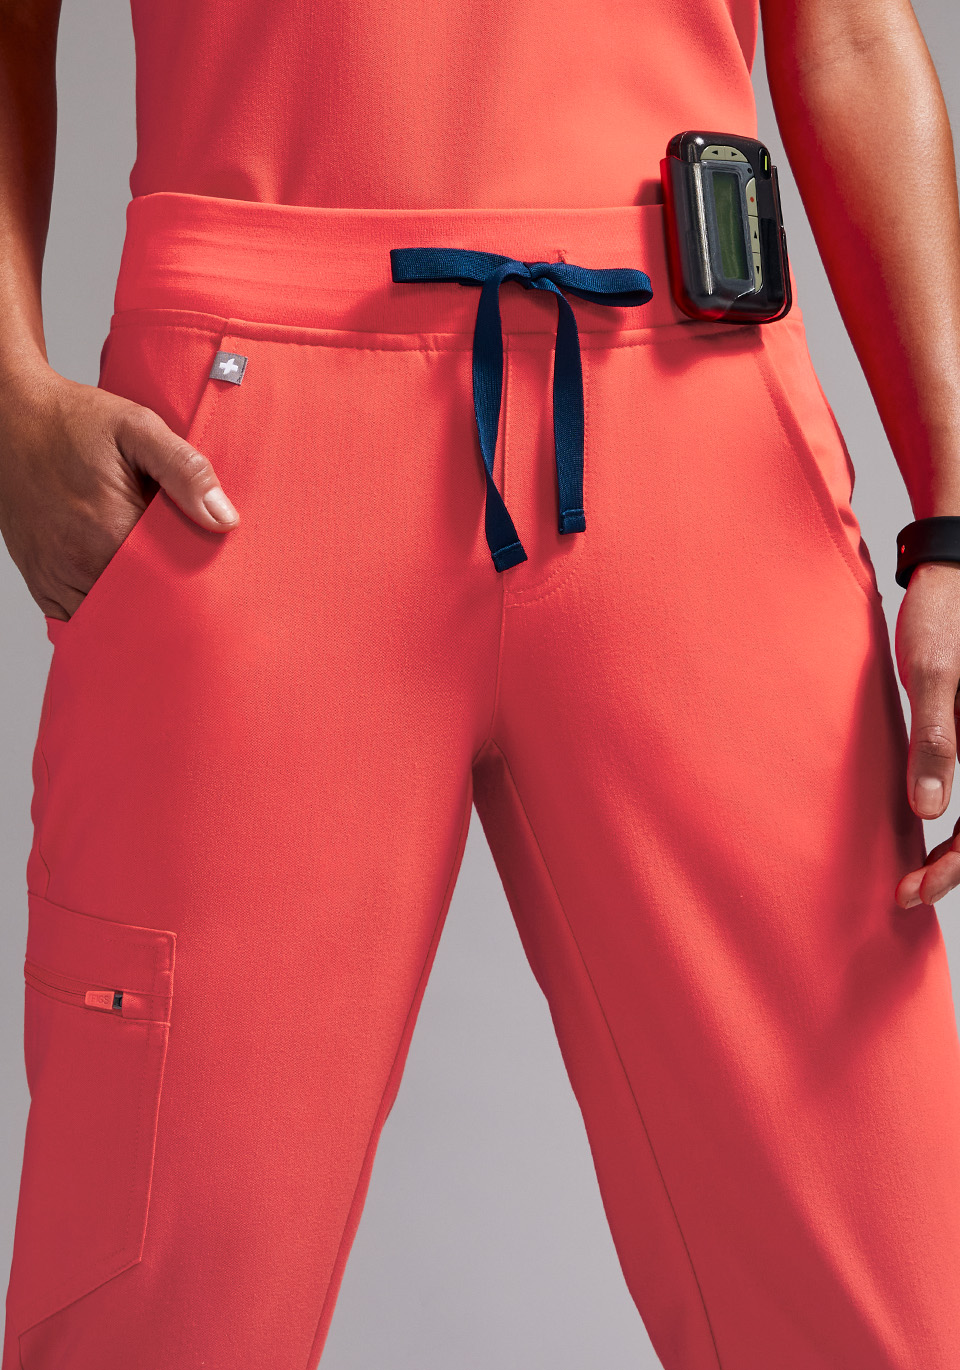 NWT FIGS Limited Women's Auburn PETITE Zamora Jogger Scrub Pants XL